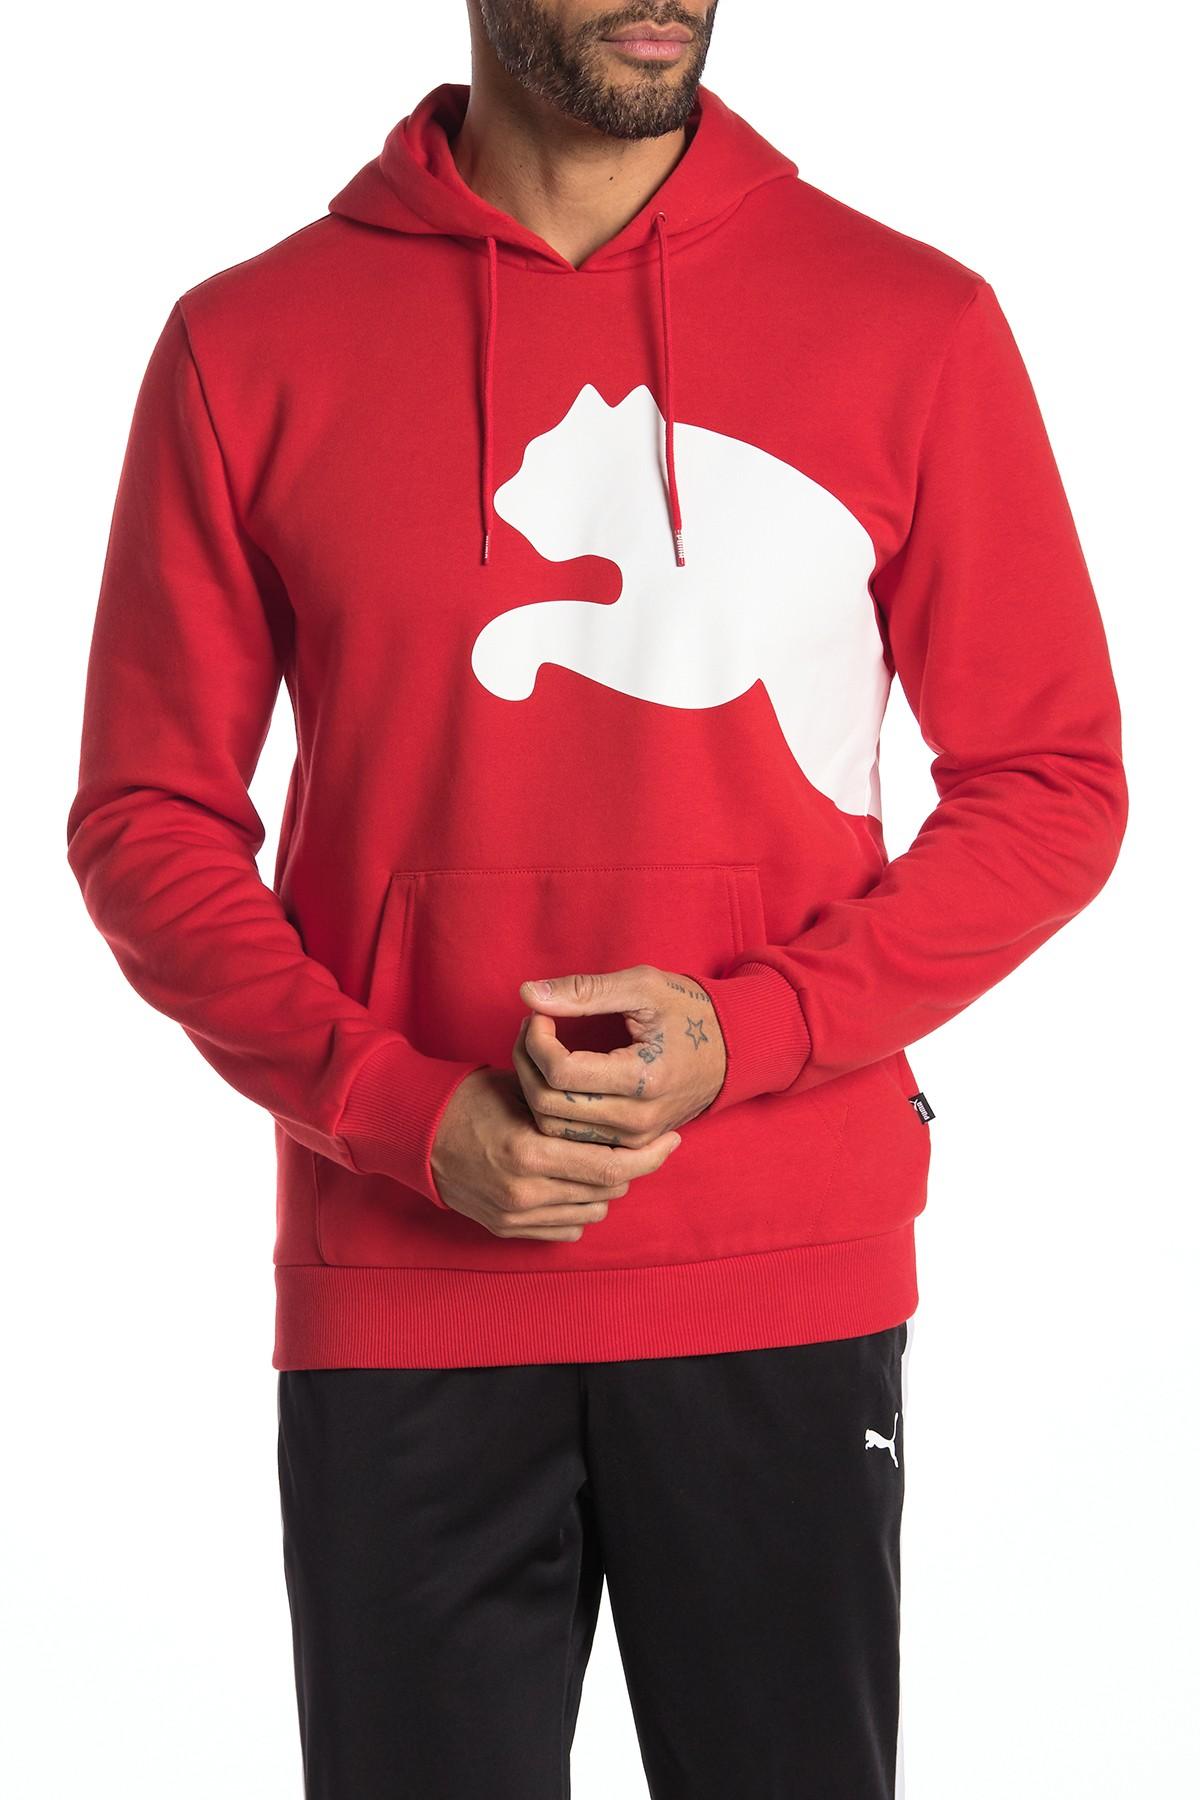 PUMA Big Logo Fleece Pullover Hoodie in Red for Men - Lyst